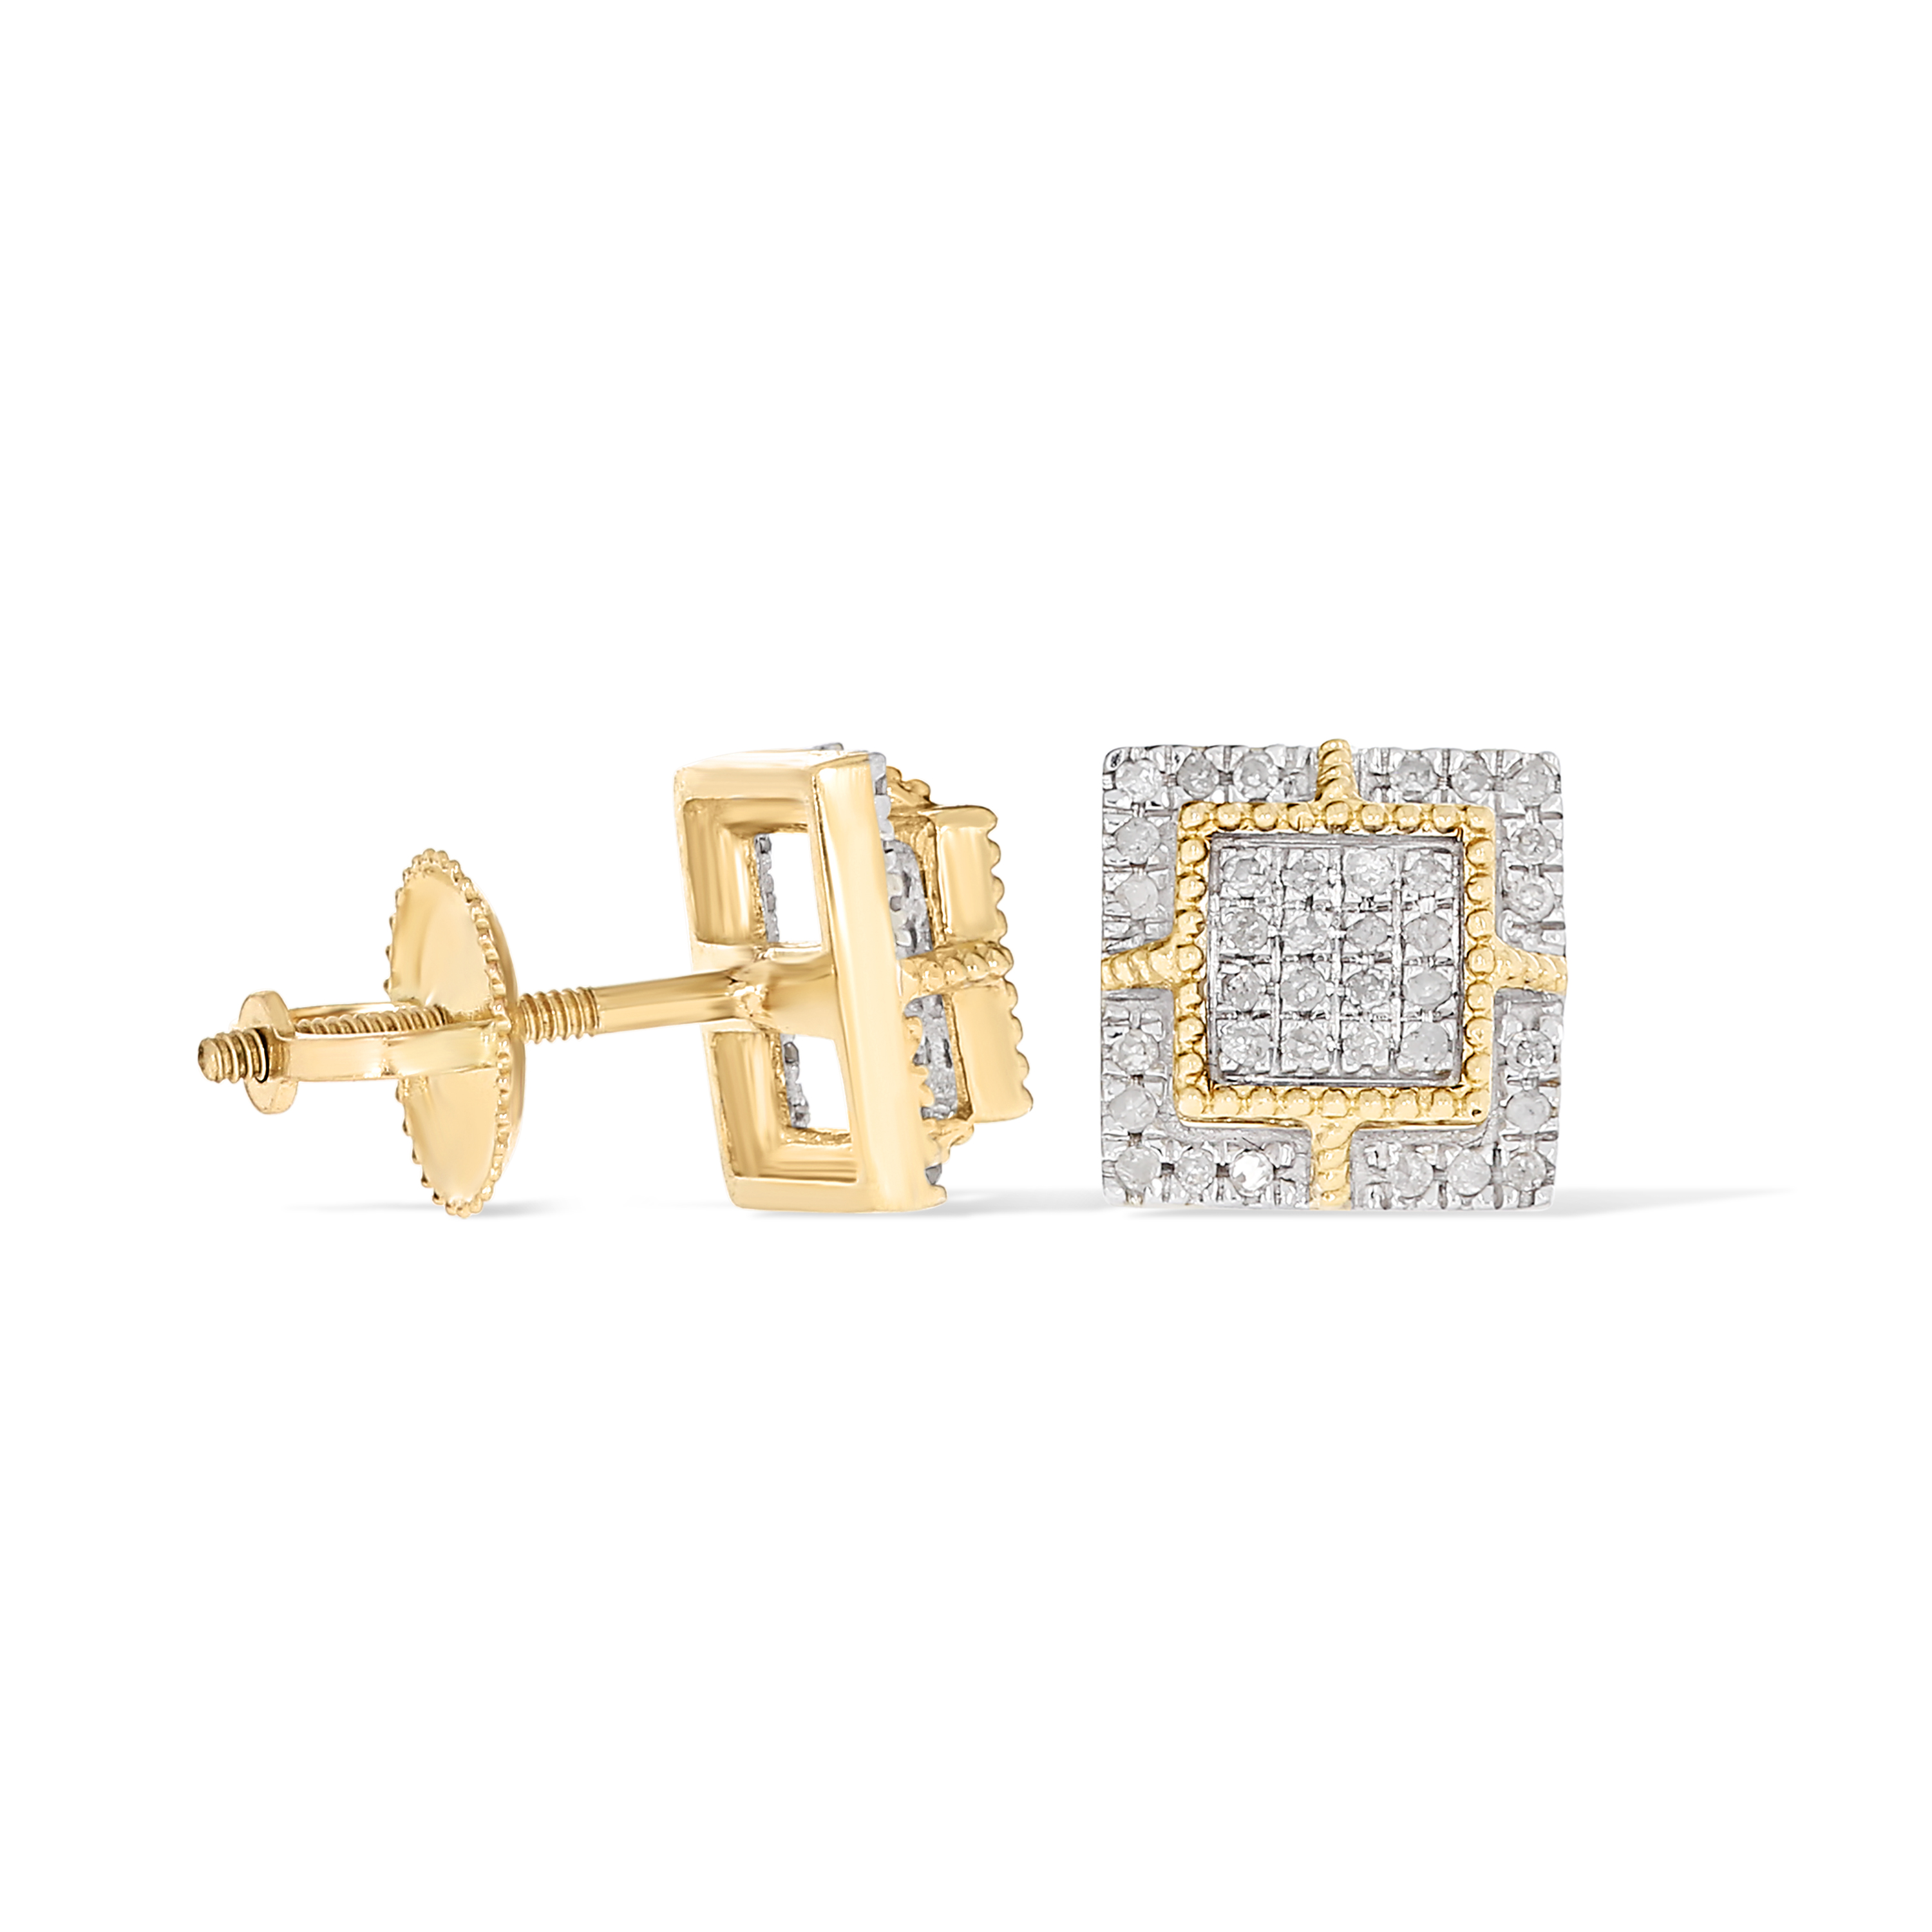 Square Design Diamond Earrings 0.18 ct. 10k Yellow Gold